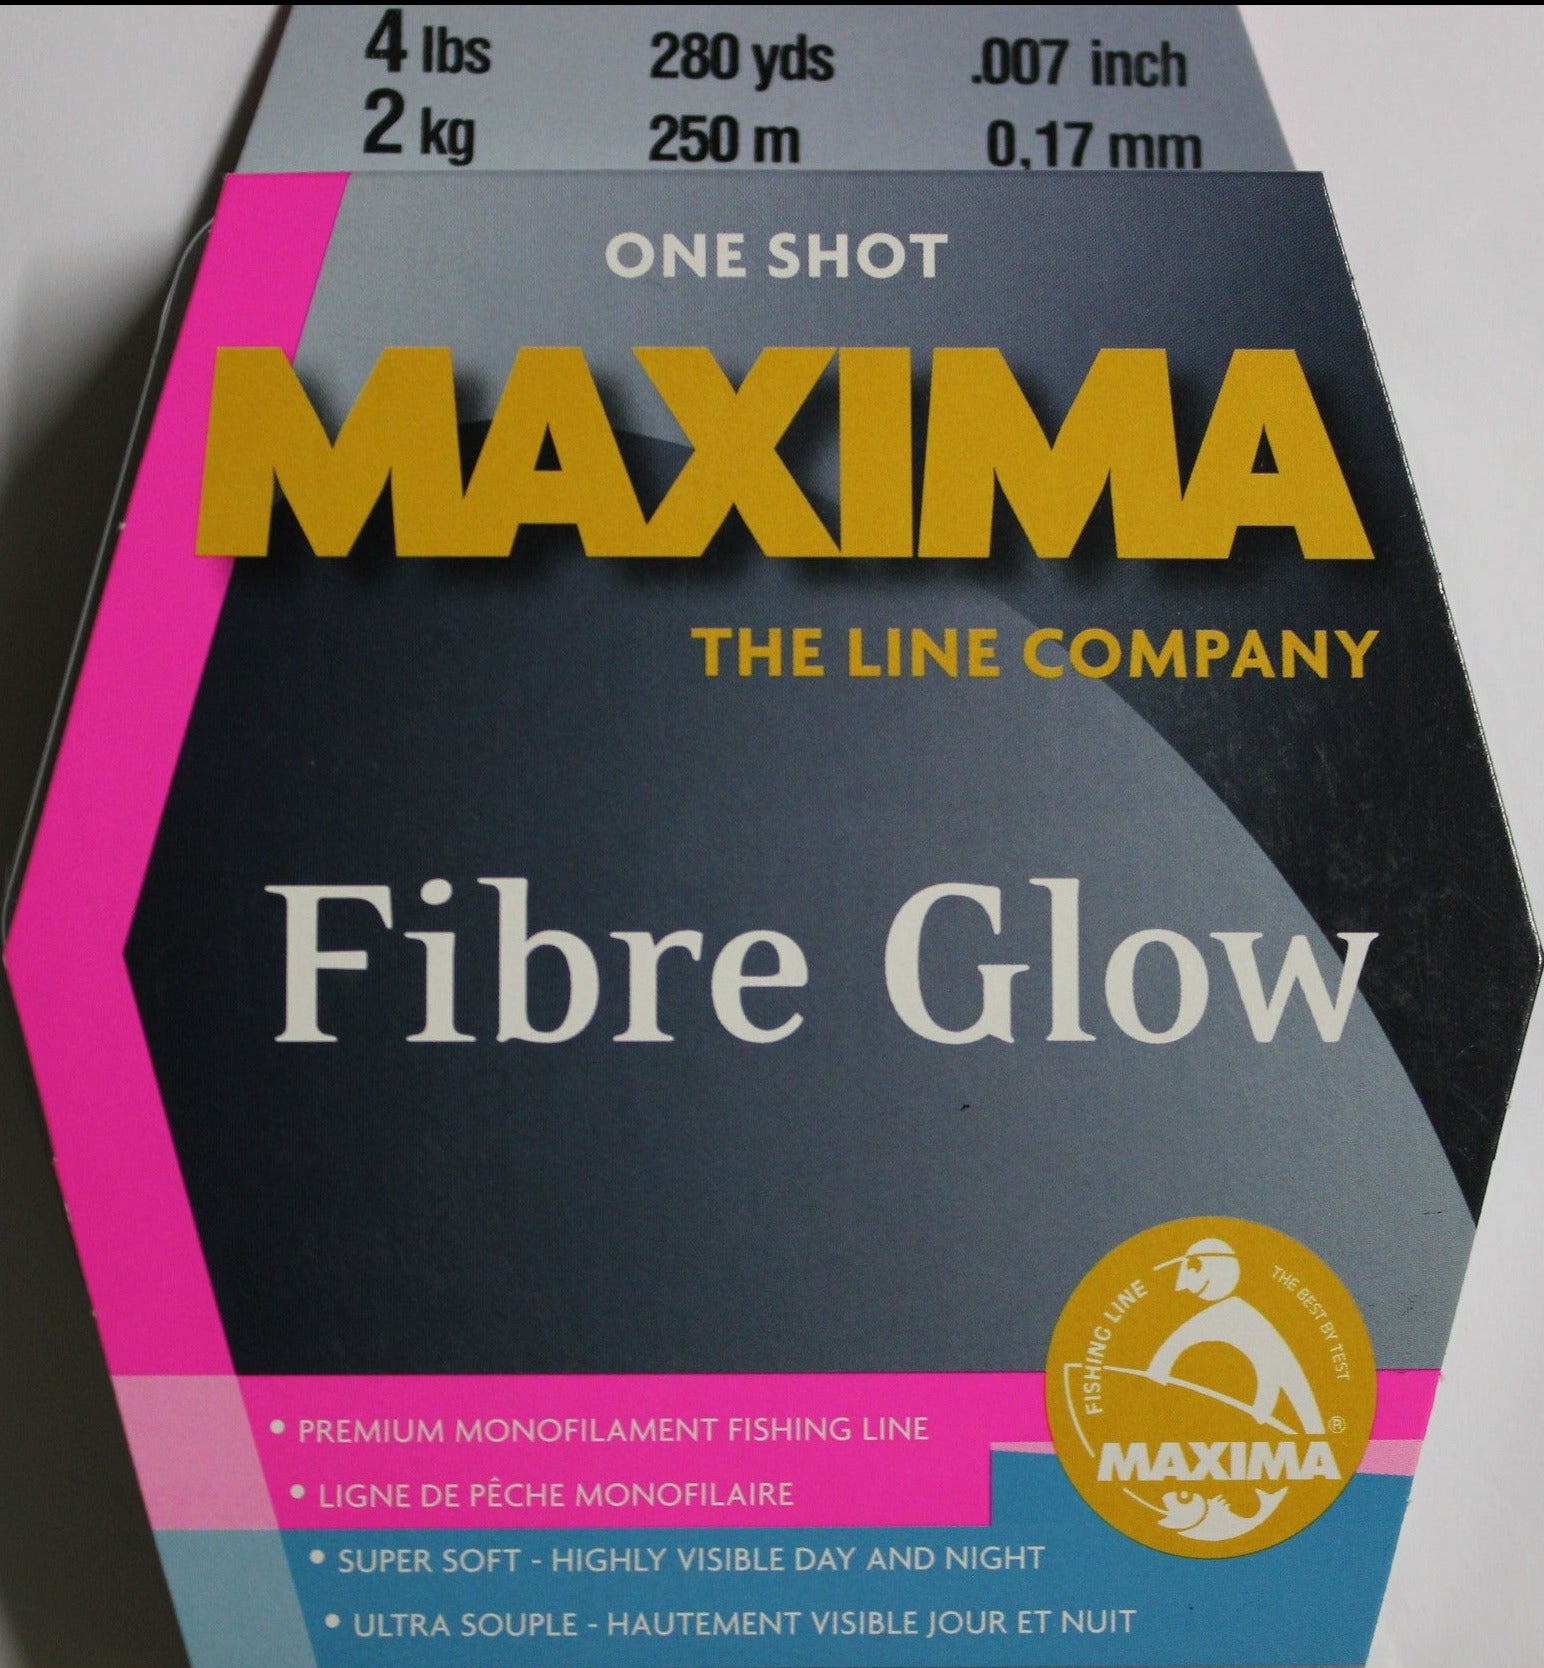 Maxima Fibre Glow One Shot Fishing Line – Ultimate Fishing and